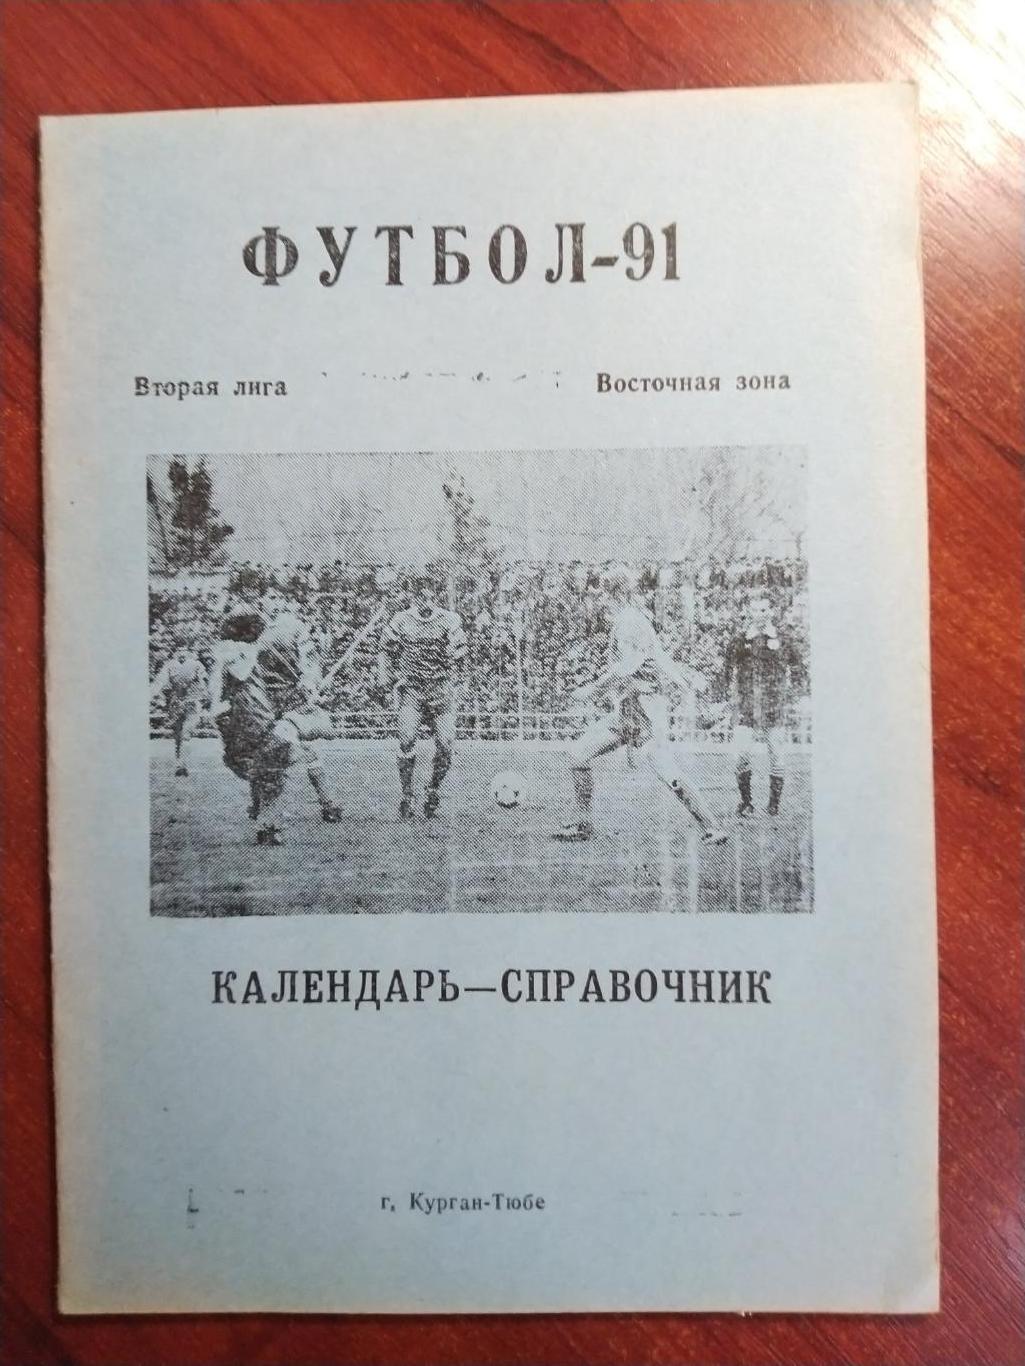 Справочник -календарь Футбол 1991 Вахш г. Курган -Тюбе